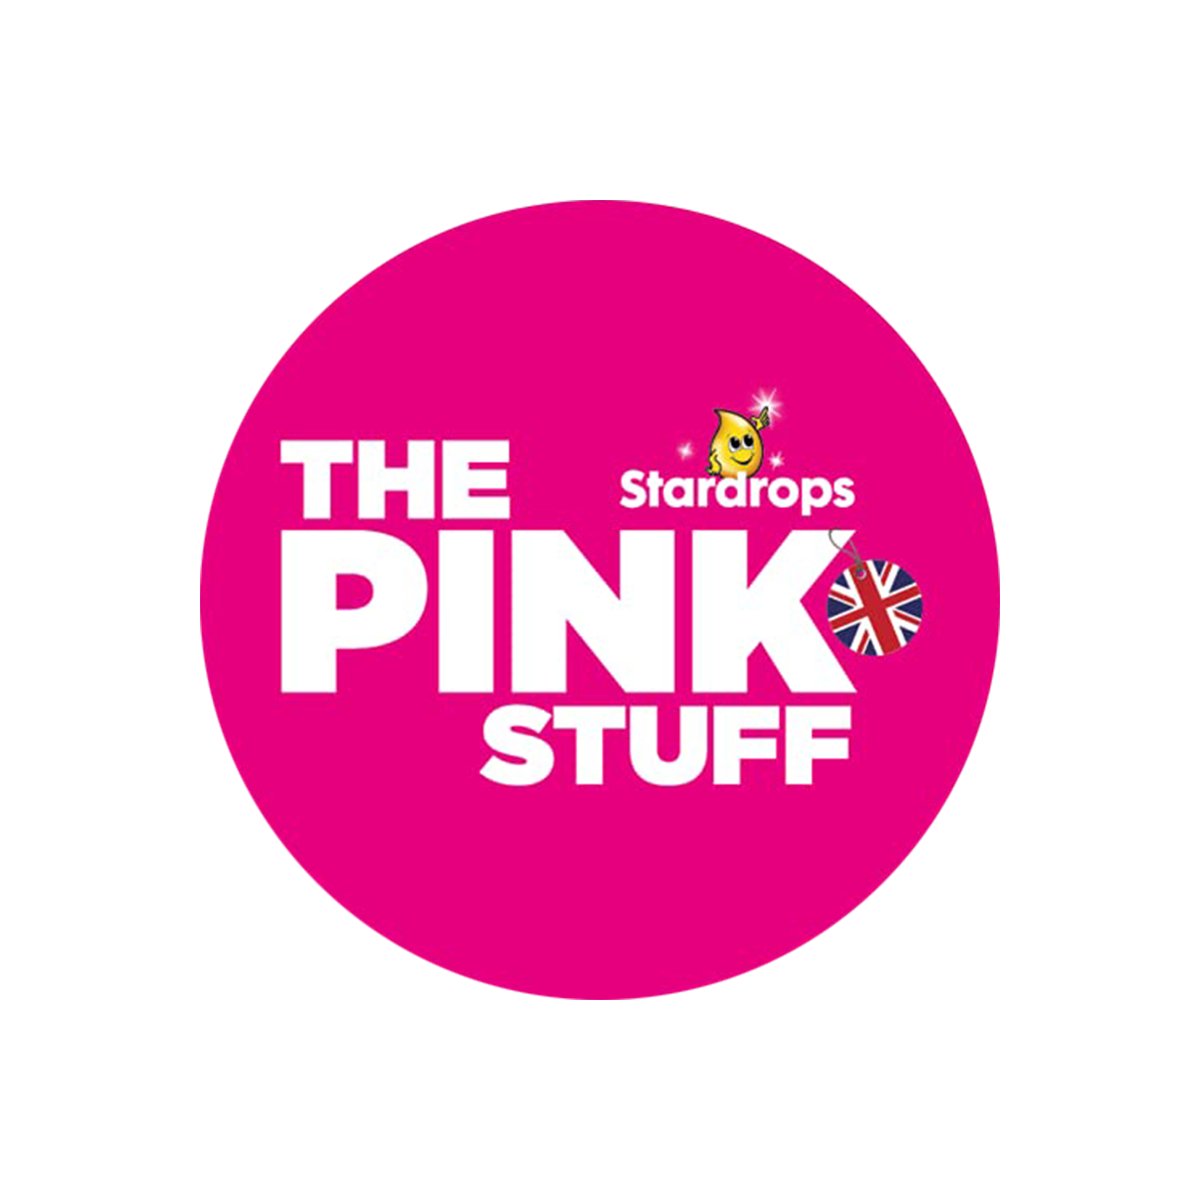 The Pink Stuff